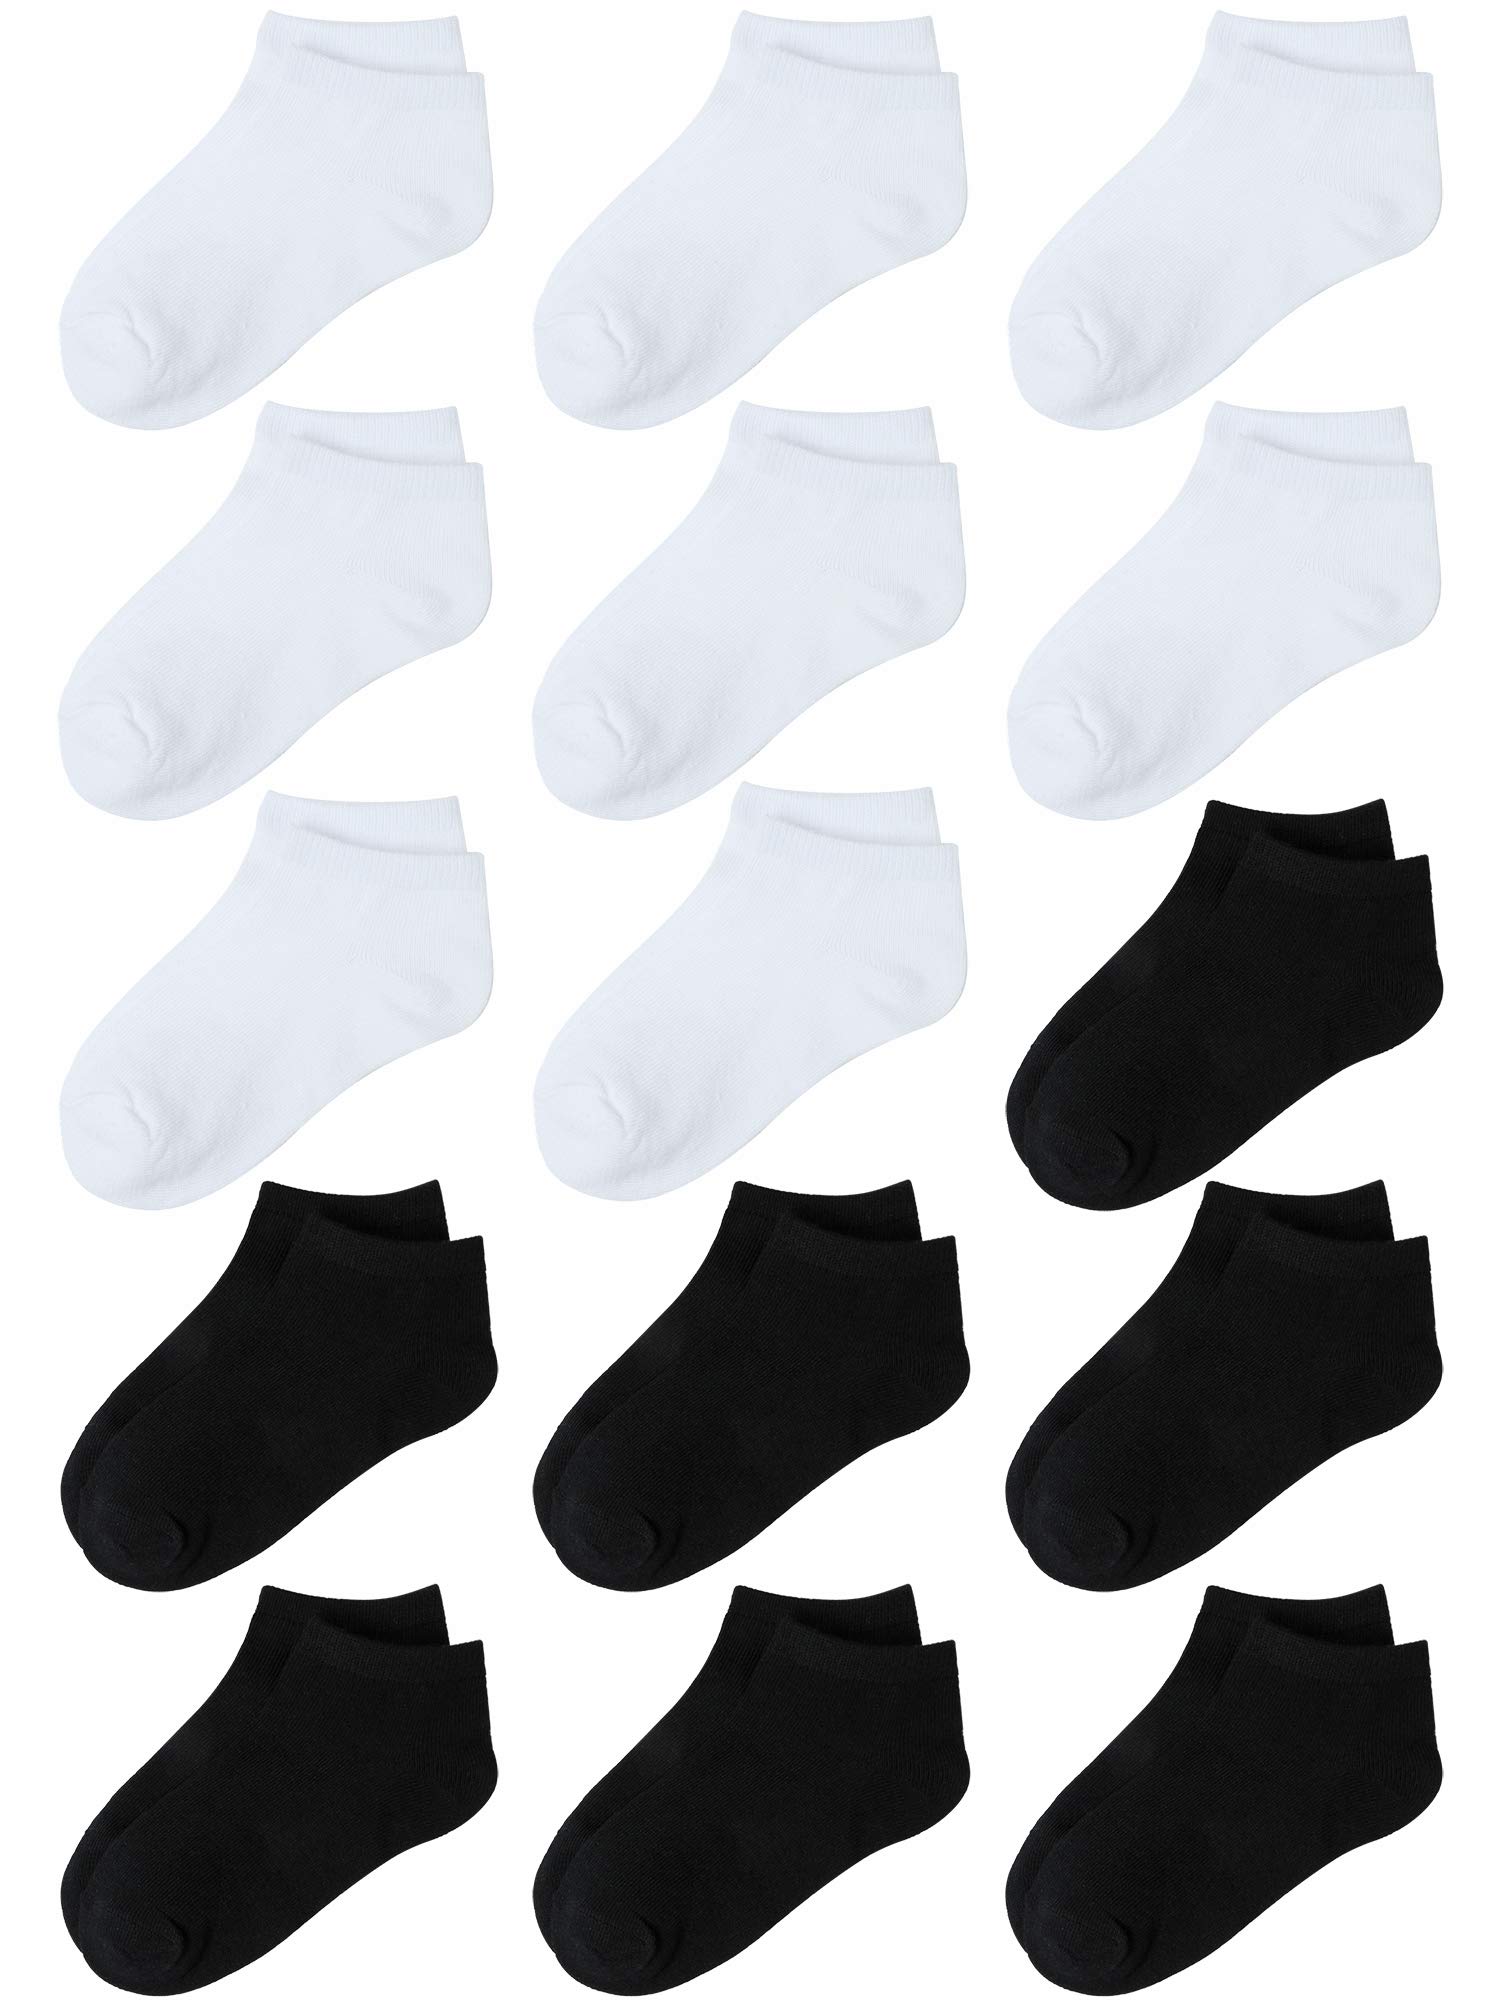 Cooraby 15 Pack Kids' Half Cushion Low Cut Athletic Ankle Socks Boys Girls Ankle Socks